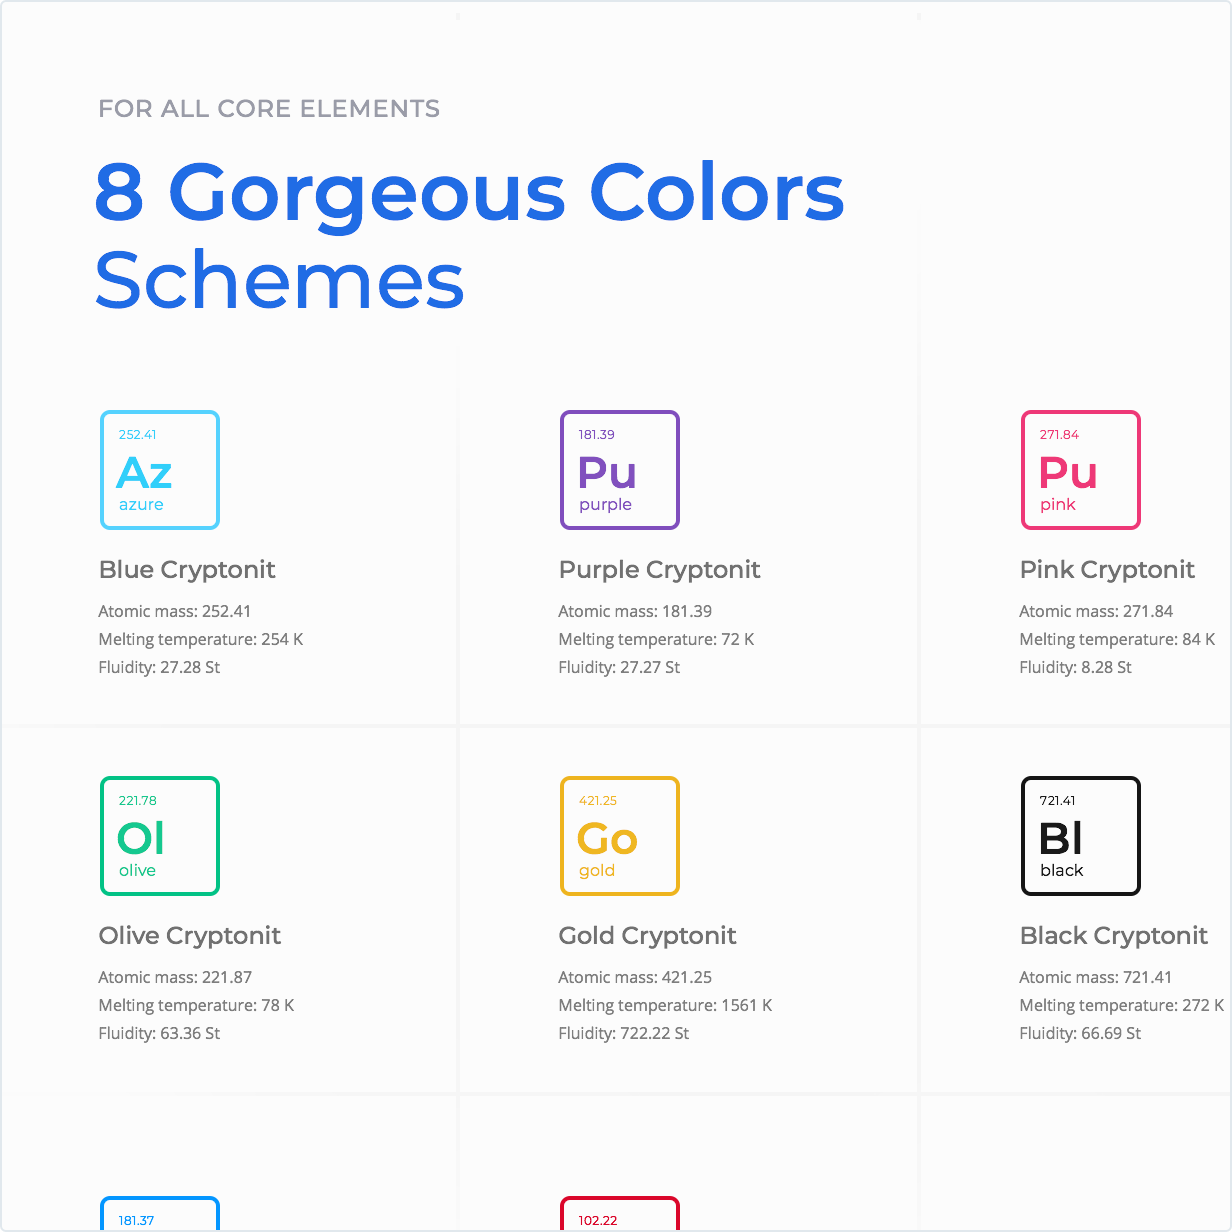 8 Gorgeous colors schemes for all core elements